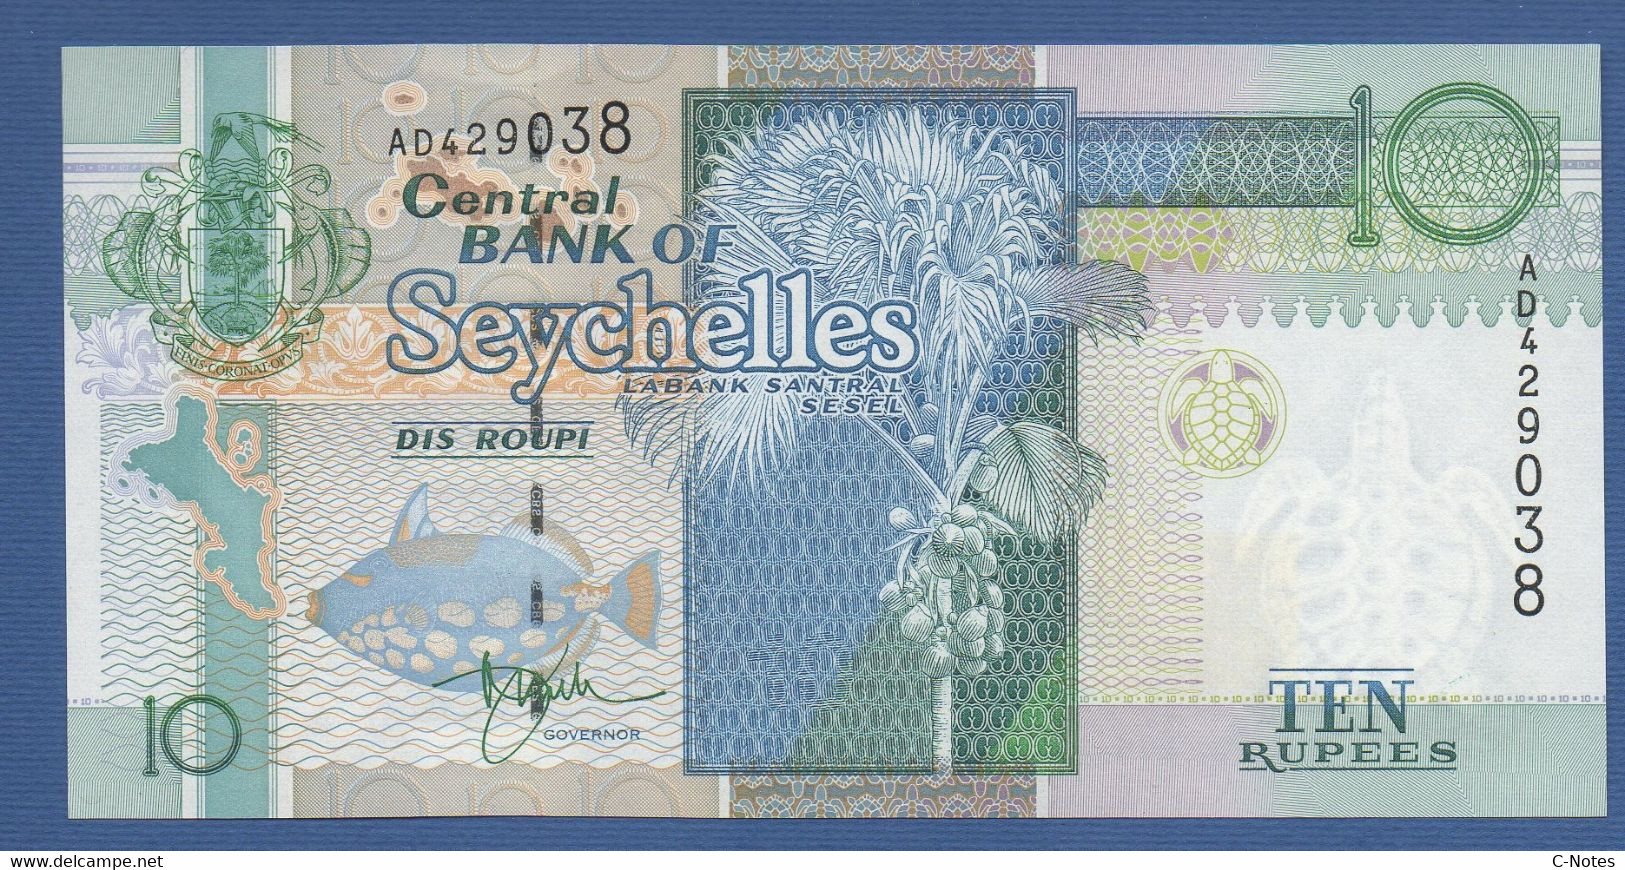 SEYCHELLES - P.36a – 10 RUPEES ND (1998) UNC Serie AD 429038 - Seychellen